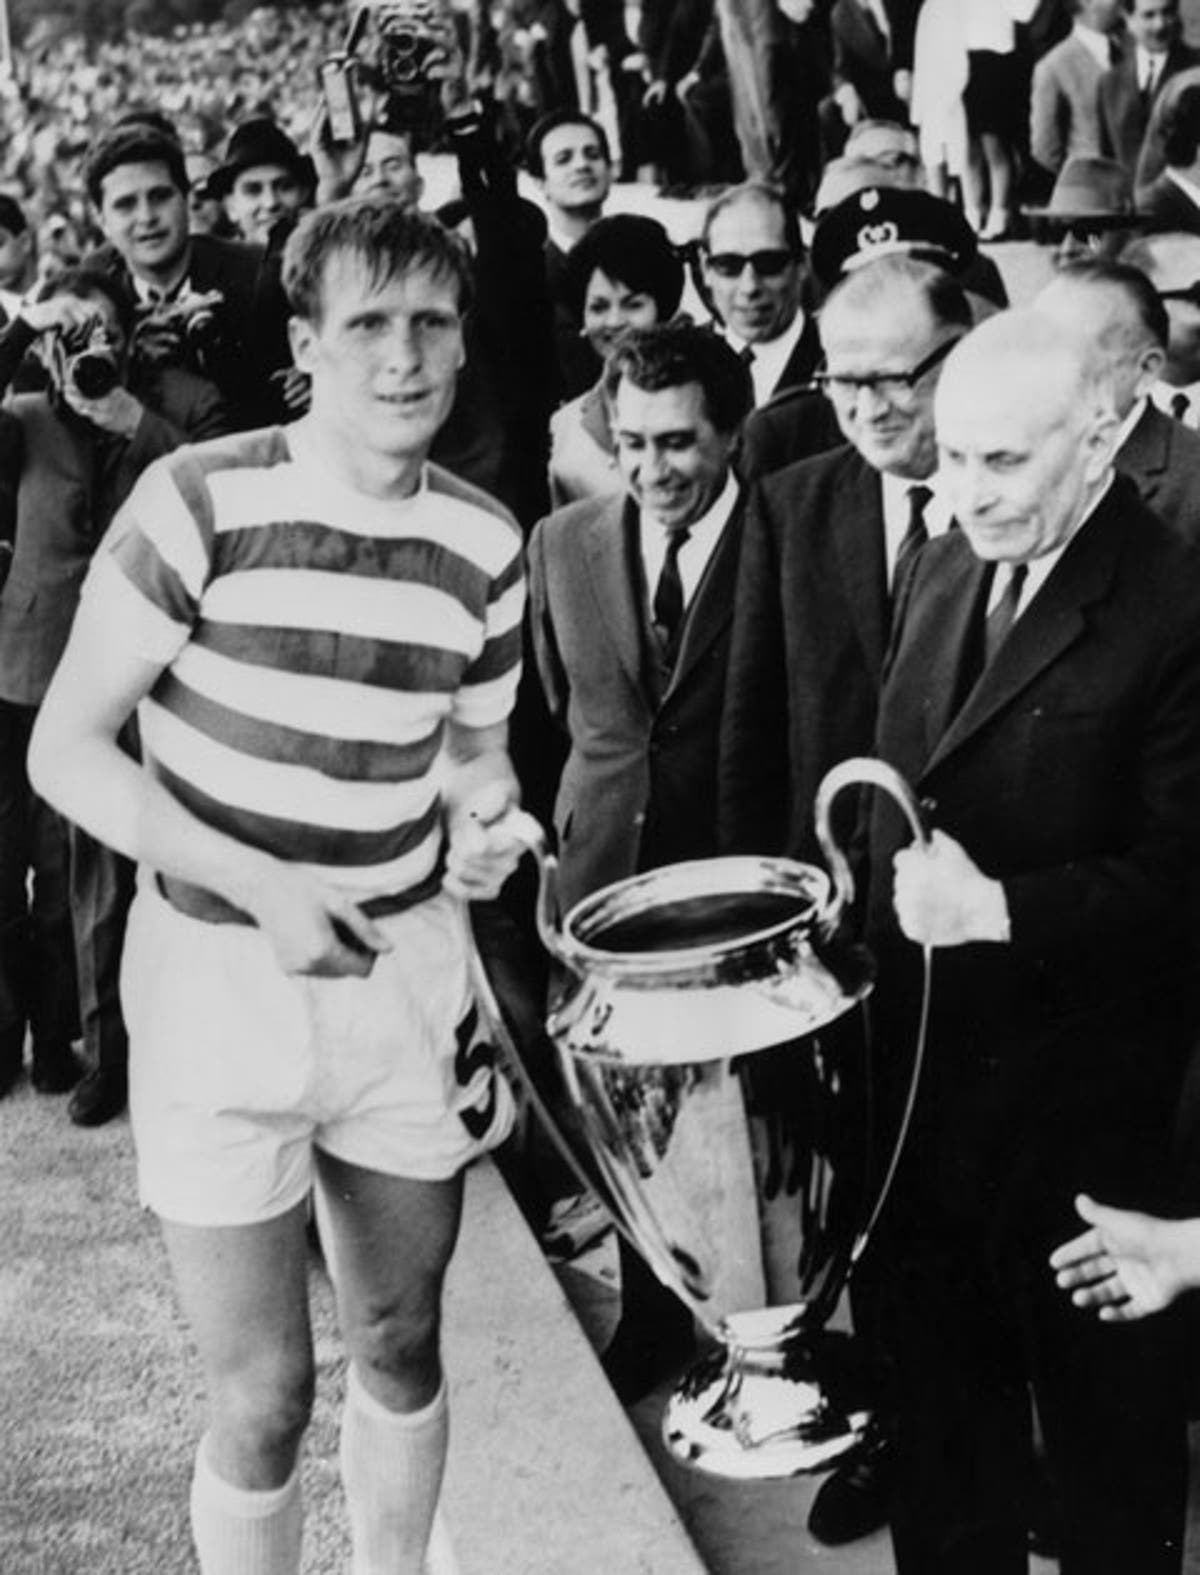 Celtic European Cup Champions 1967